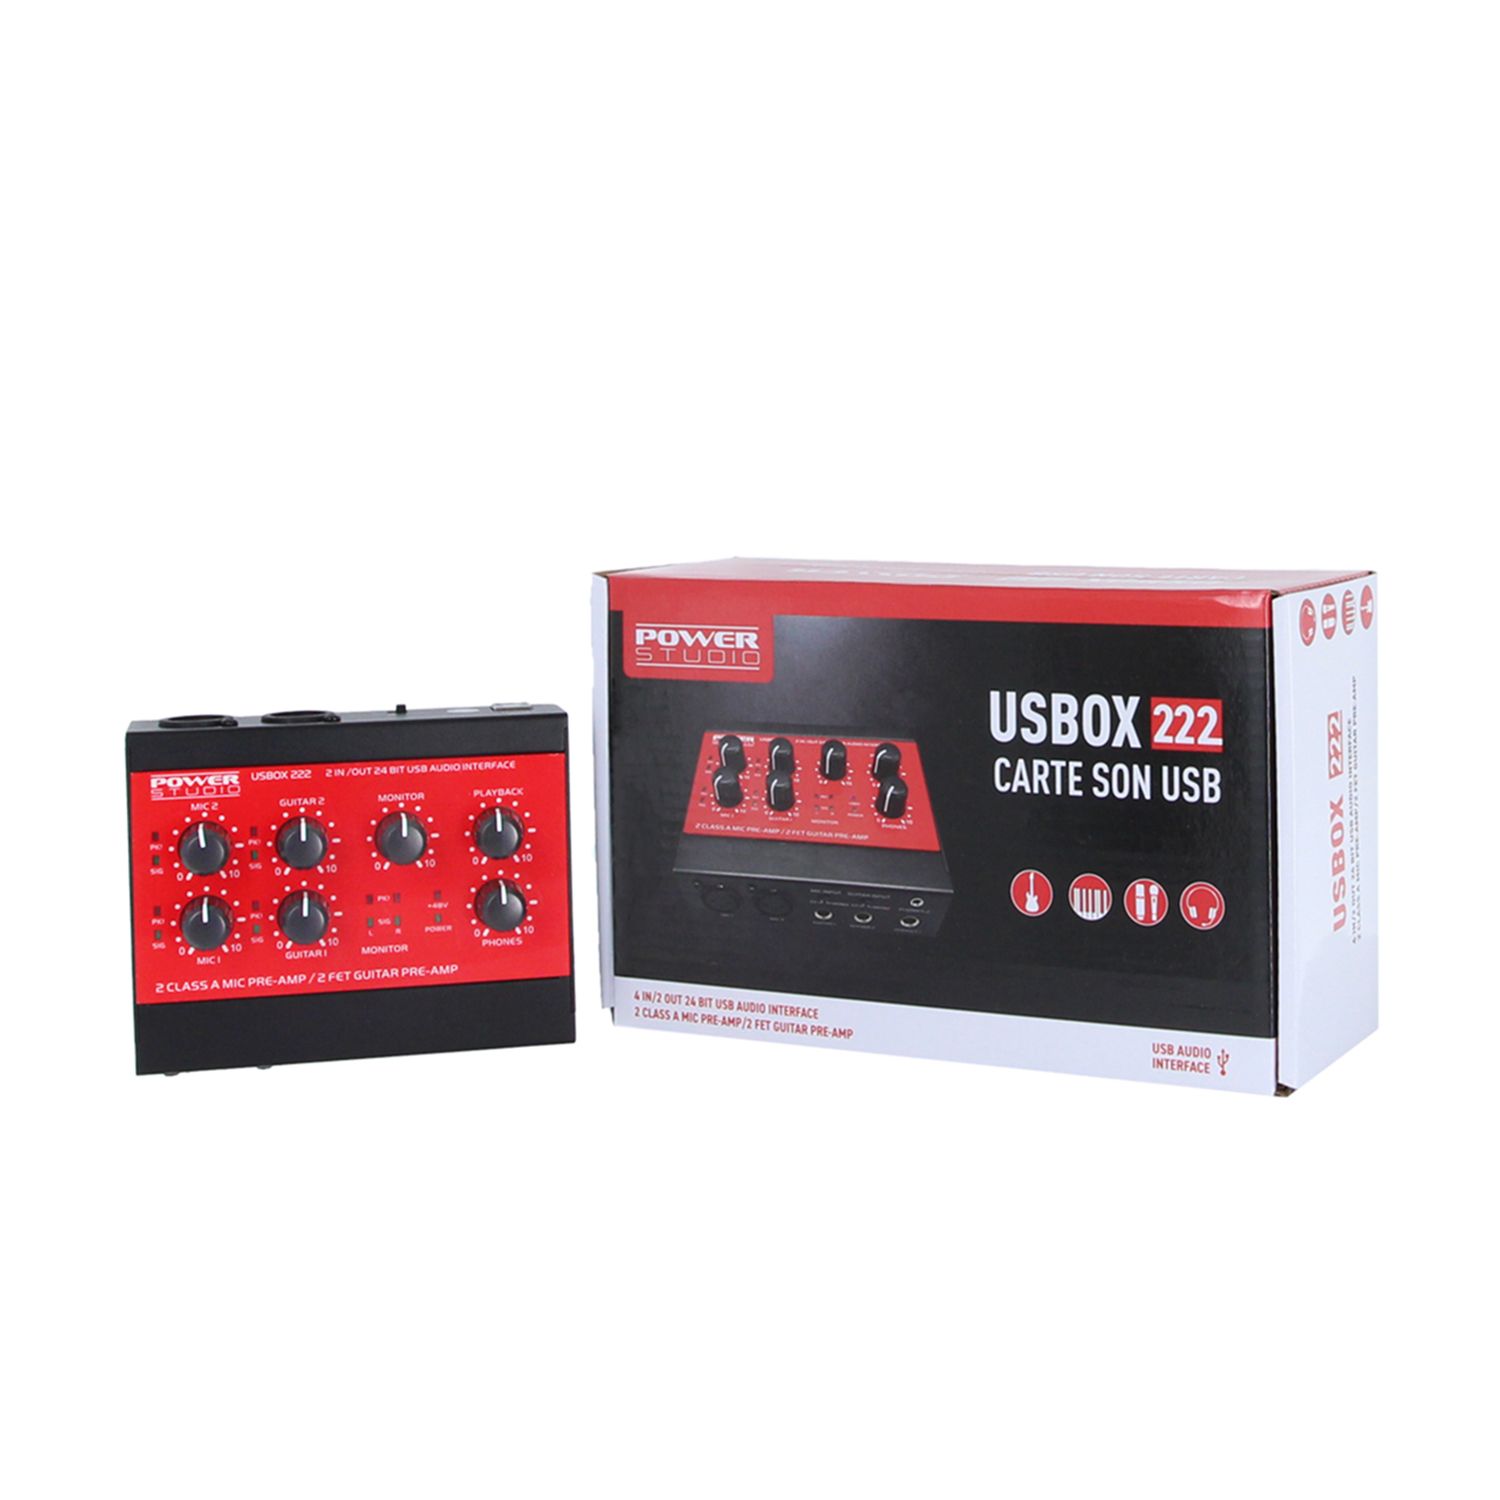 Power Studio Usbox 222 - USB audio-interface - Variation 4